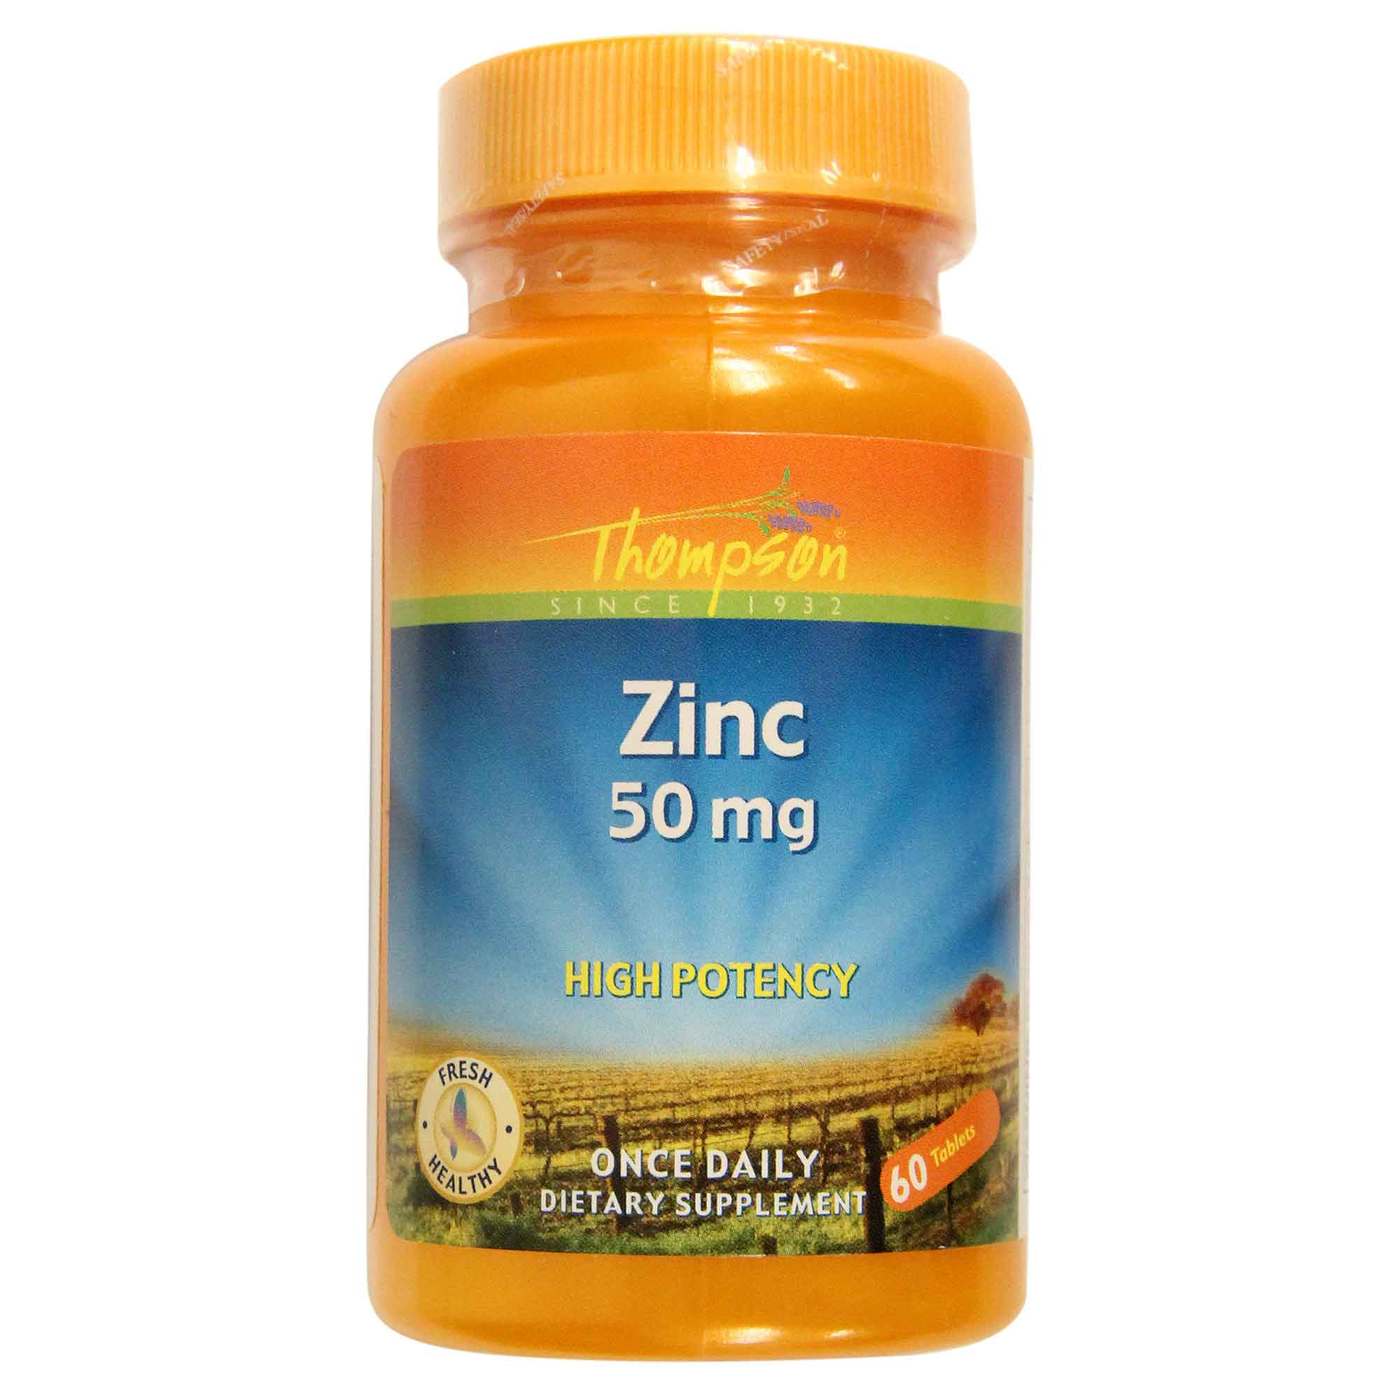 Thompson Zinc Цинк 50 мг 60 табл.